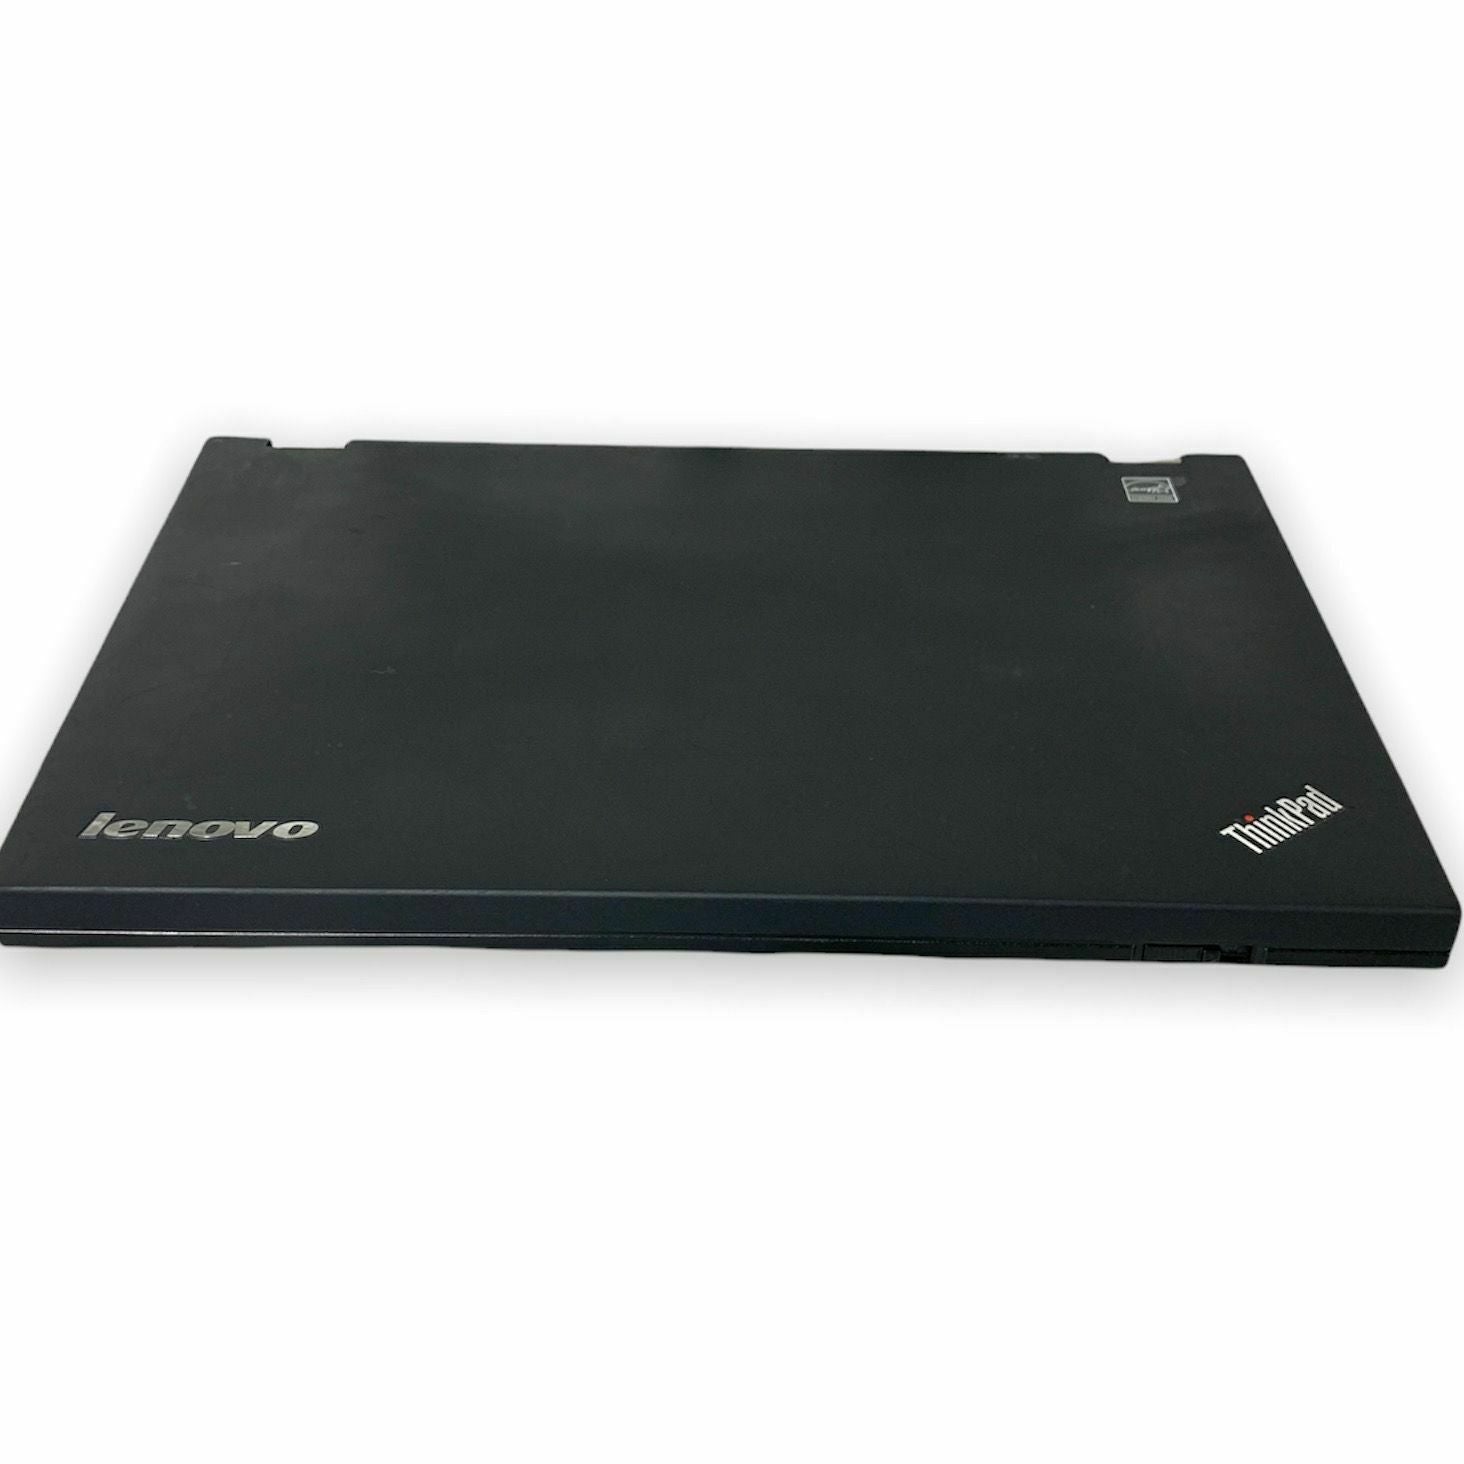 Lenovo ThinkPad T430 i5-3320M 2.60GHz 8GB RAM 500GB HDD Intel HD 4000 Win10 Pro